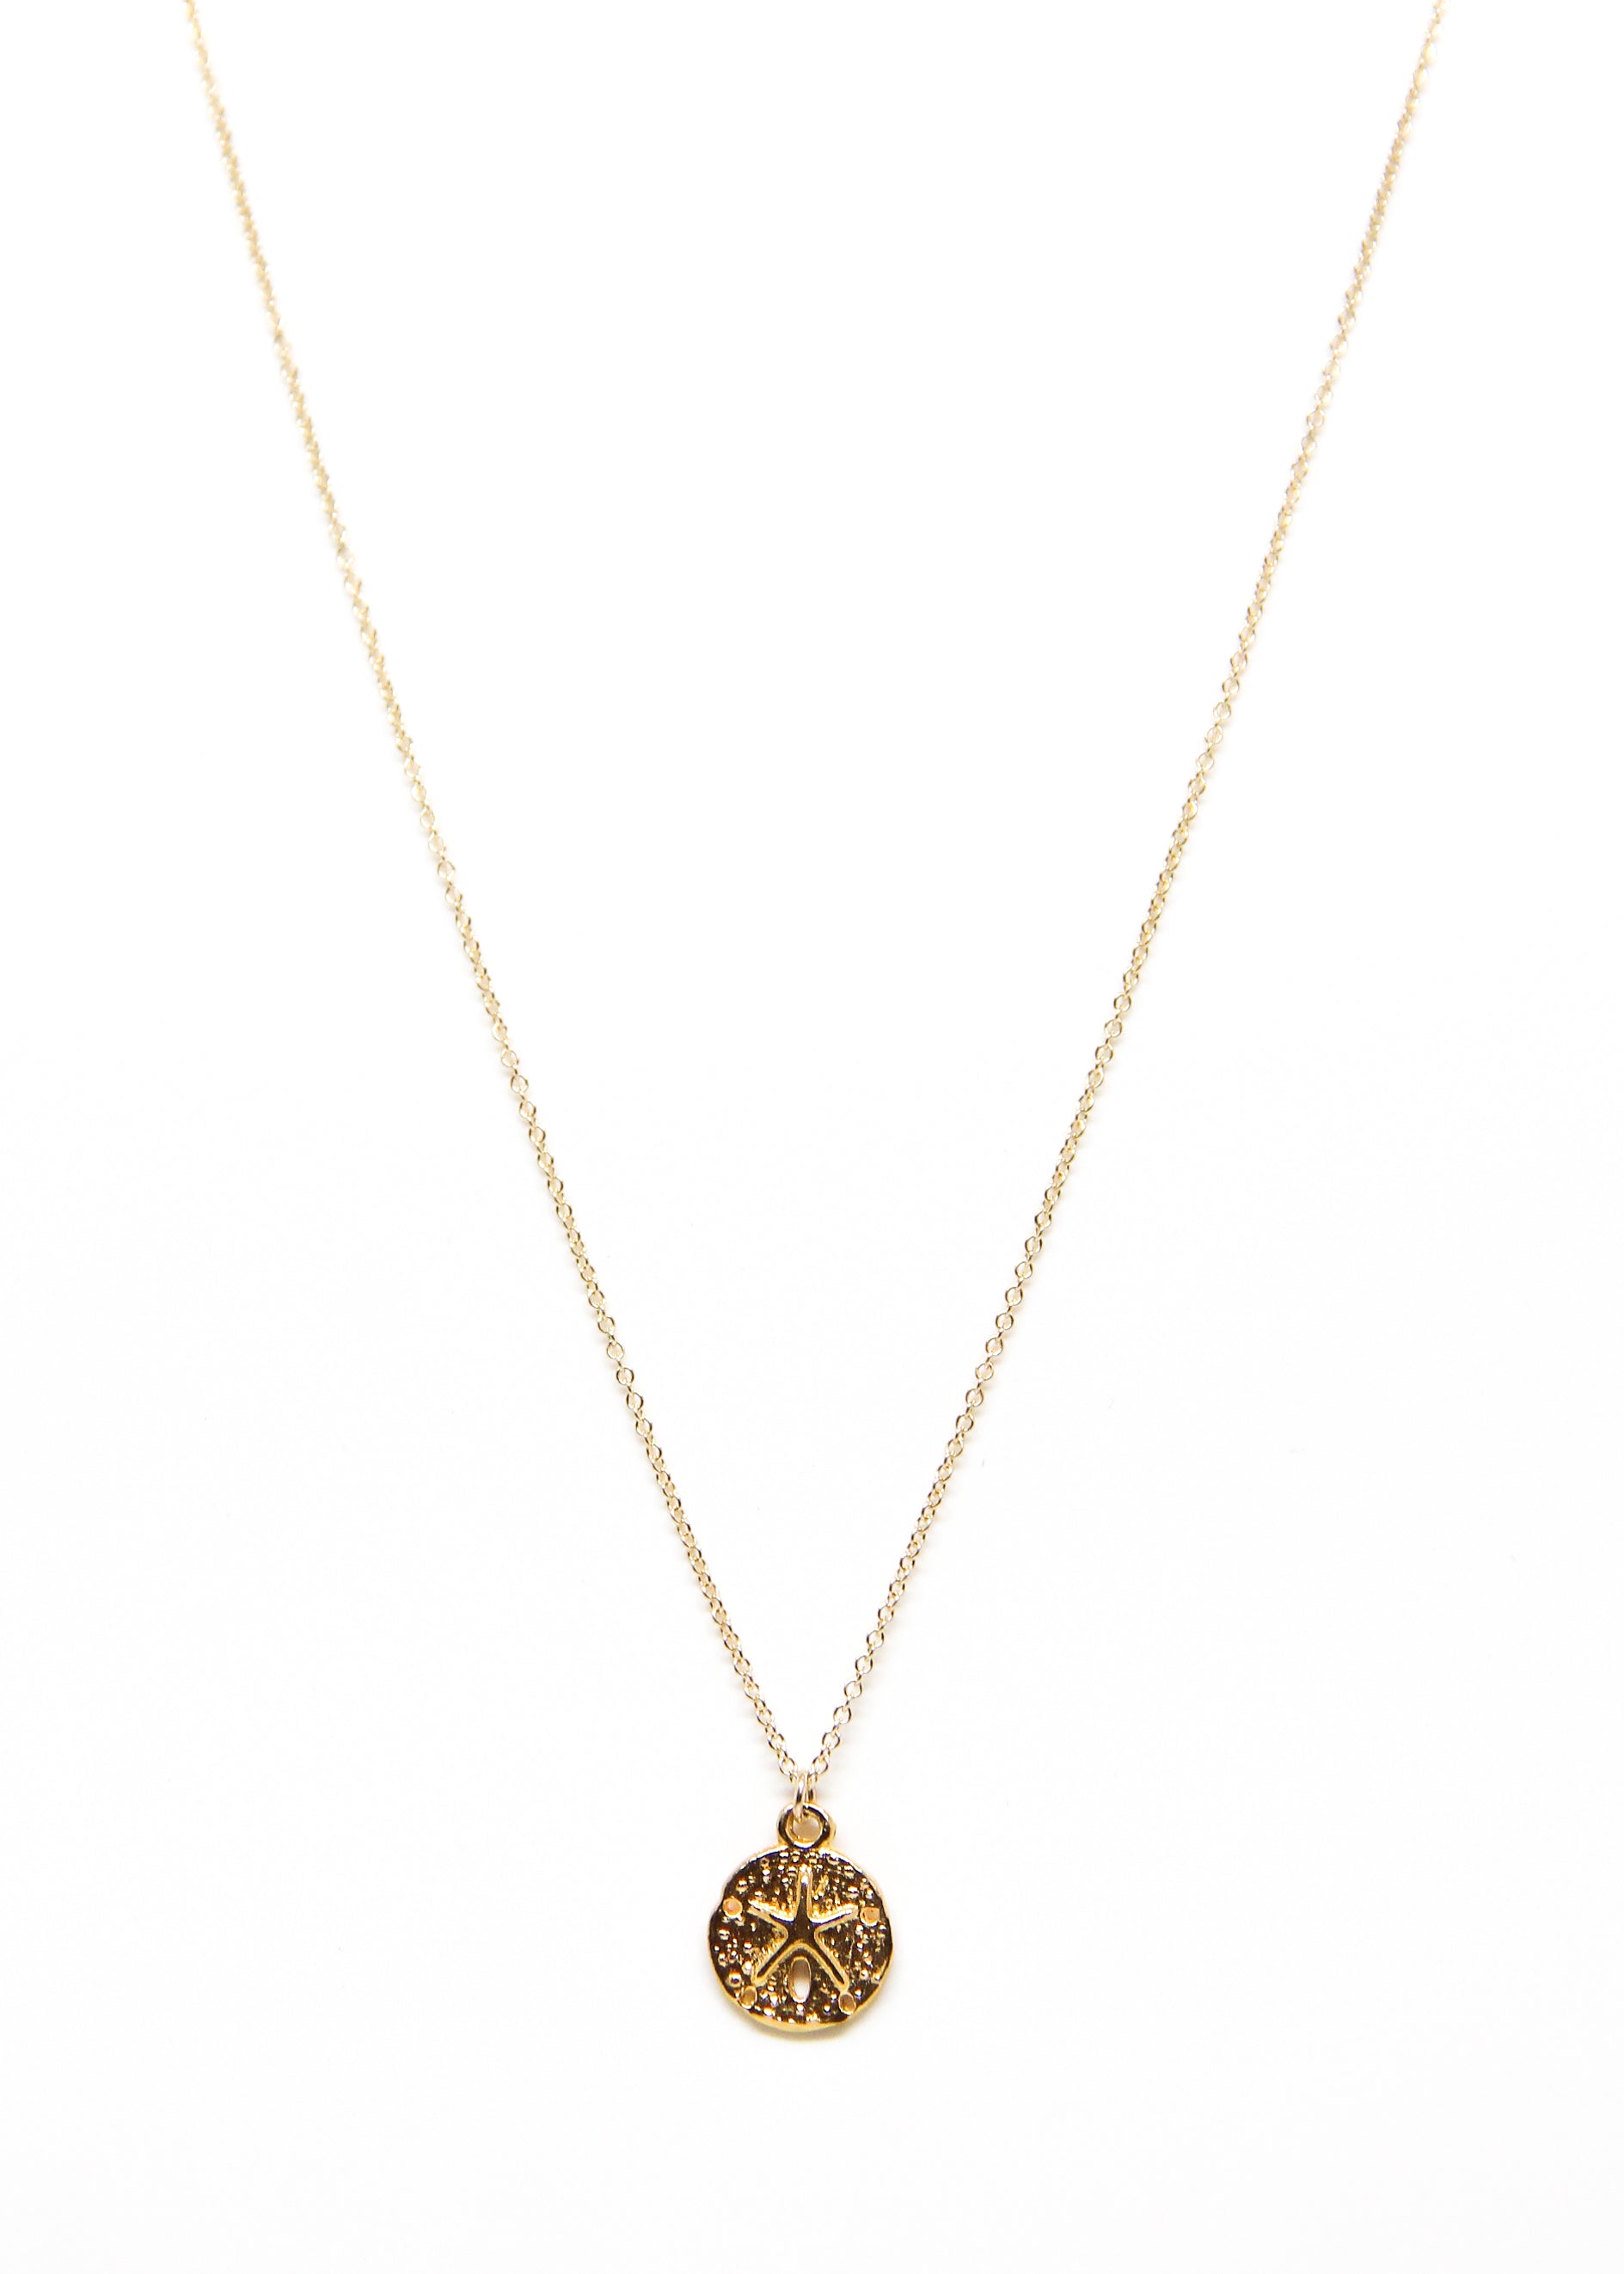 Single Necklace Sand Dollar Gold – Mina De Mar